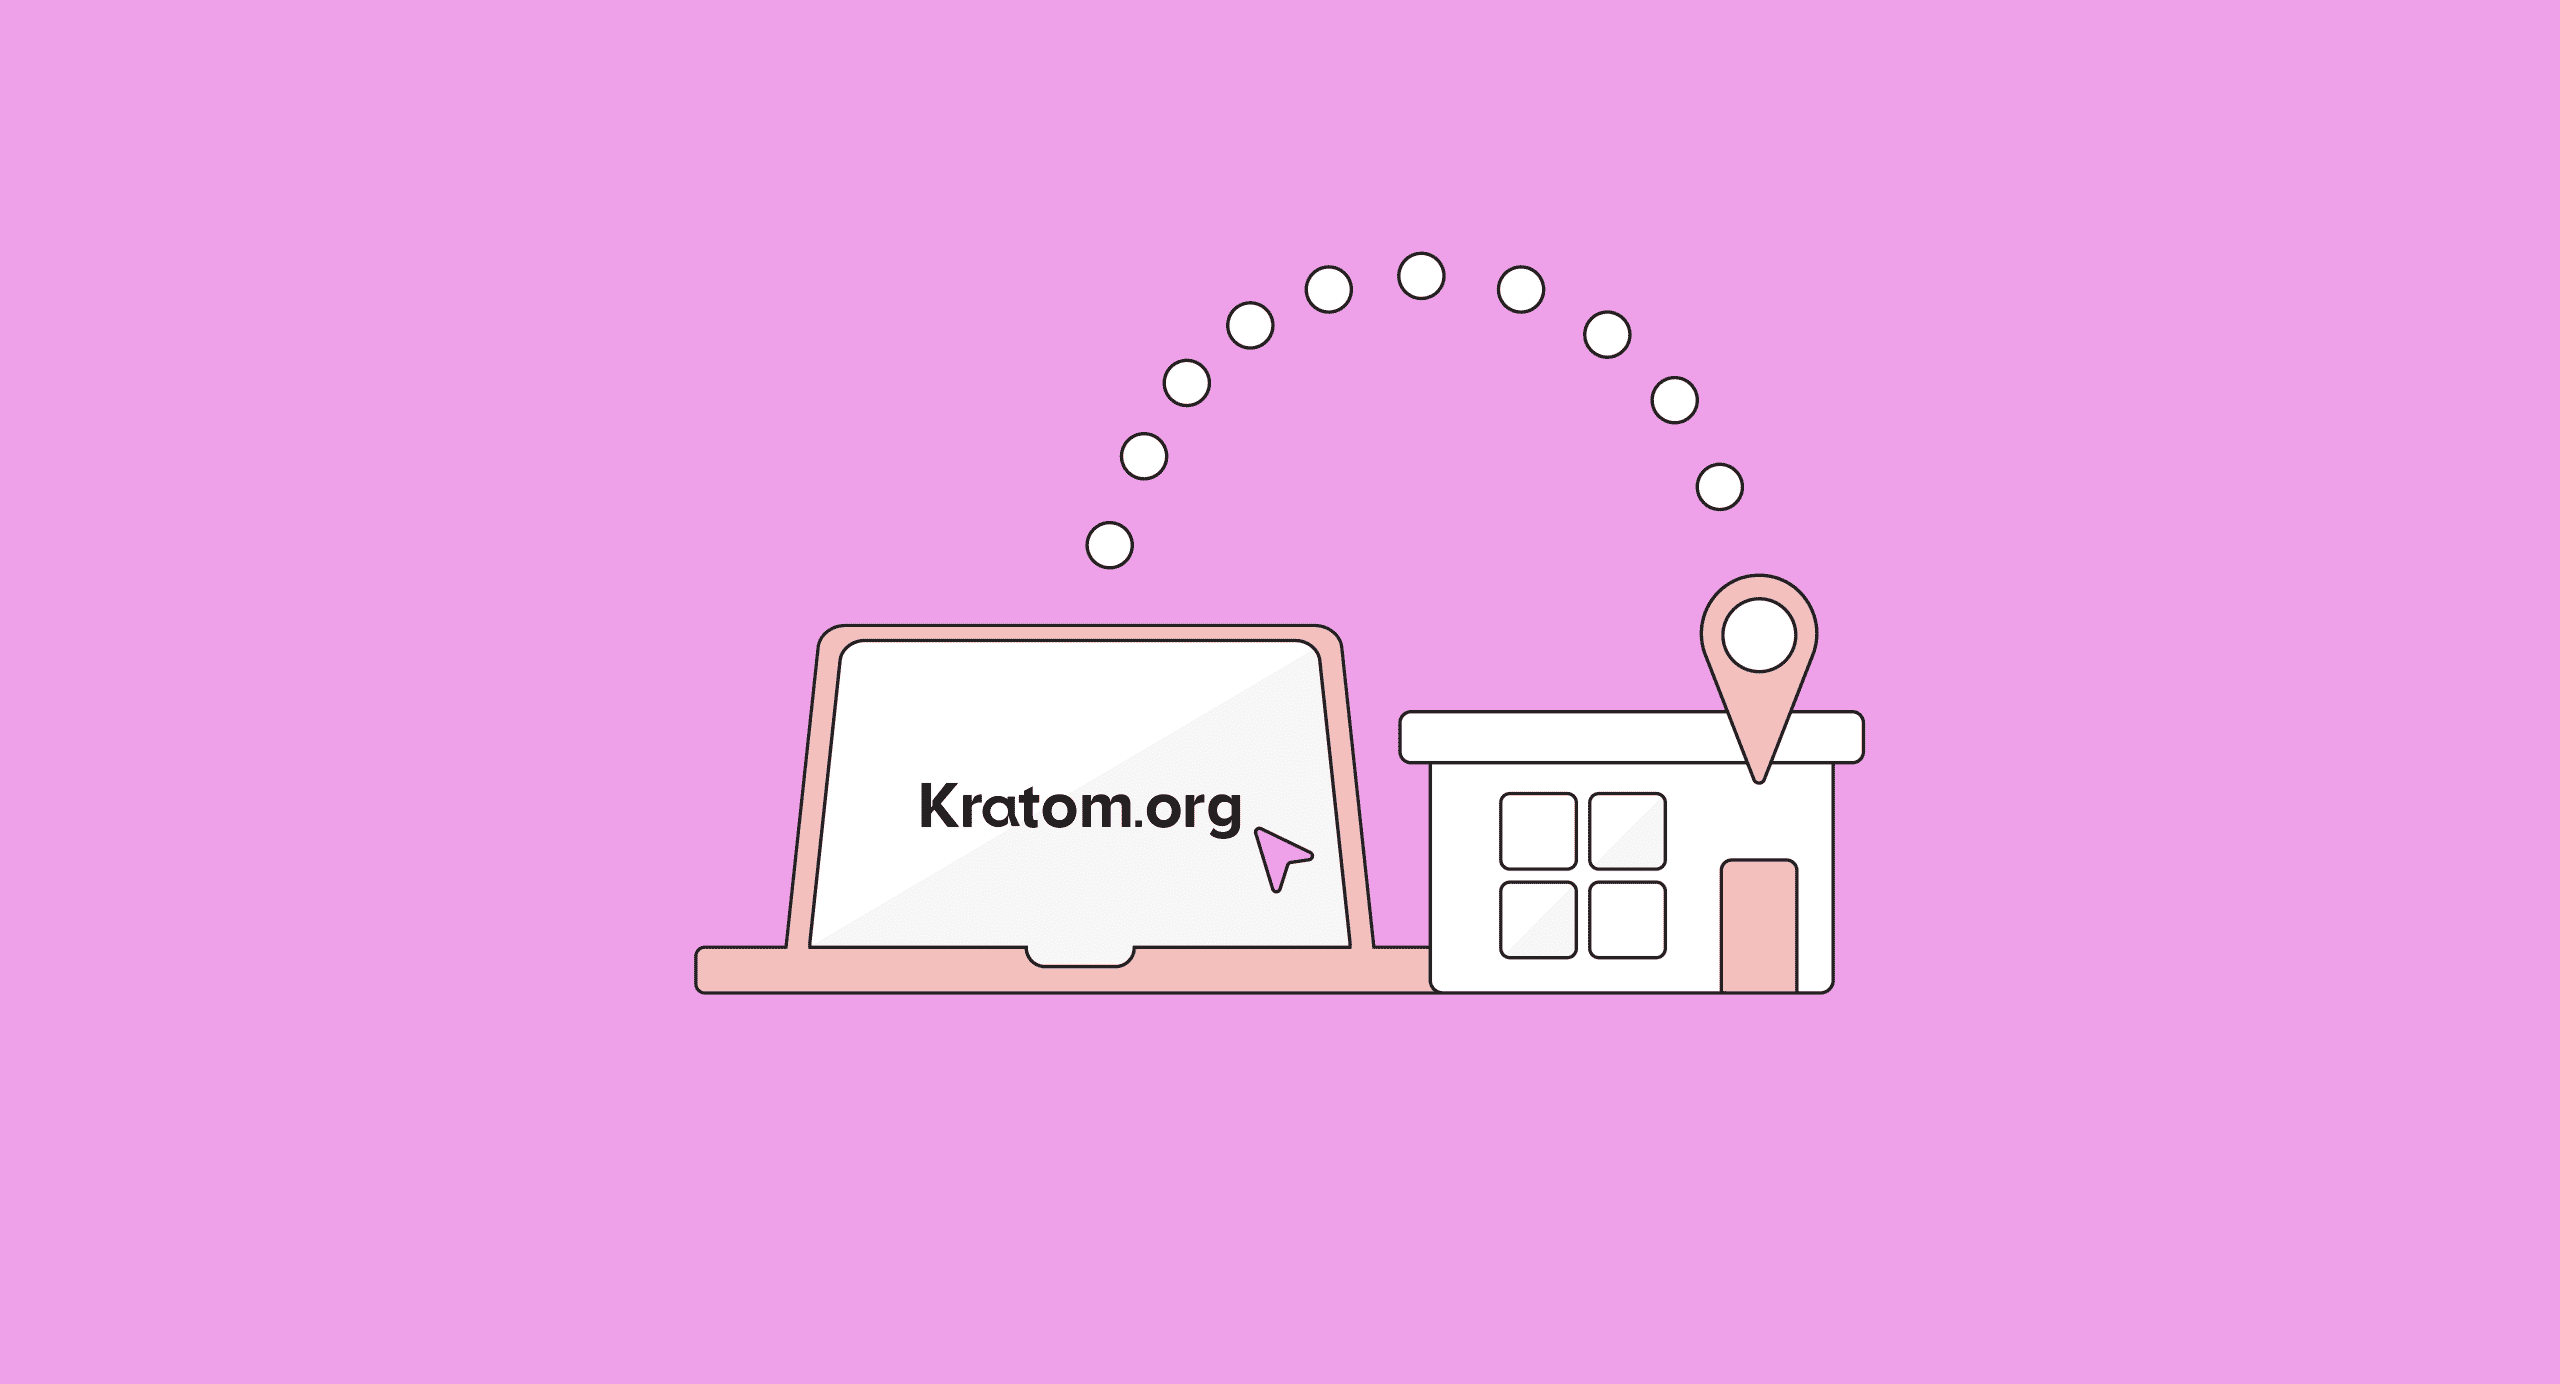 Kratom Near Me: Buying Kratom Online vs. In-Store